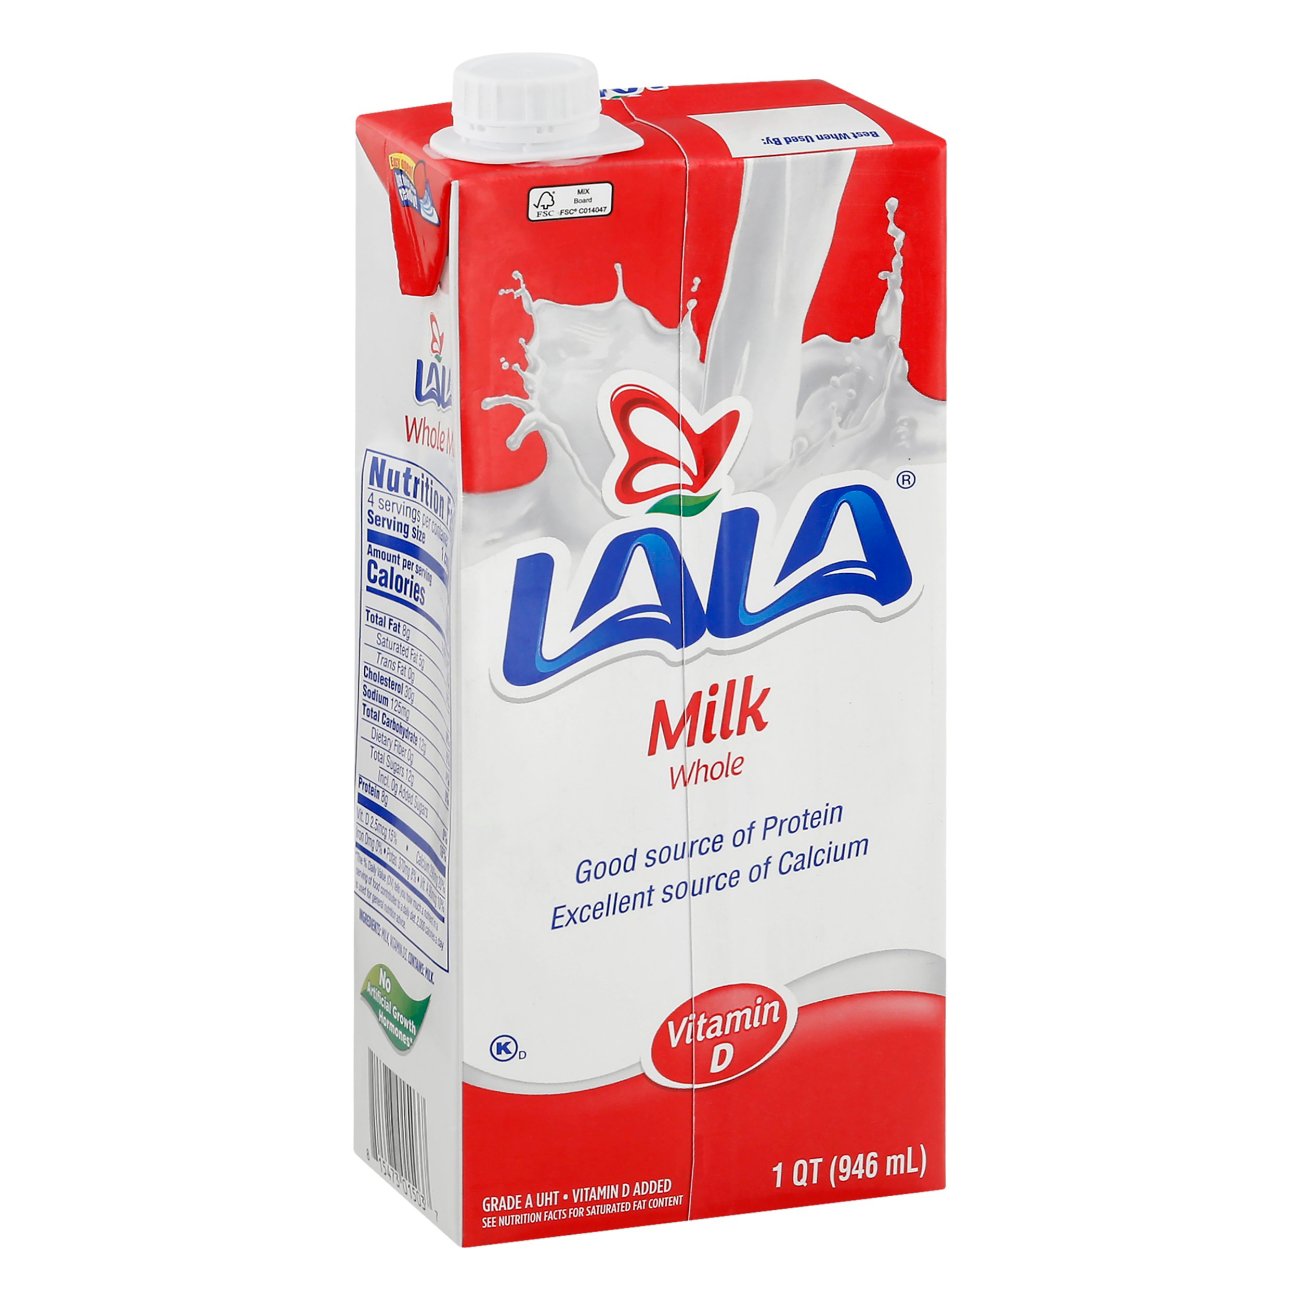 LALA Whole Milk - Shop Milk at H-E-B